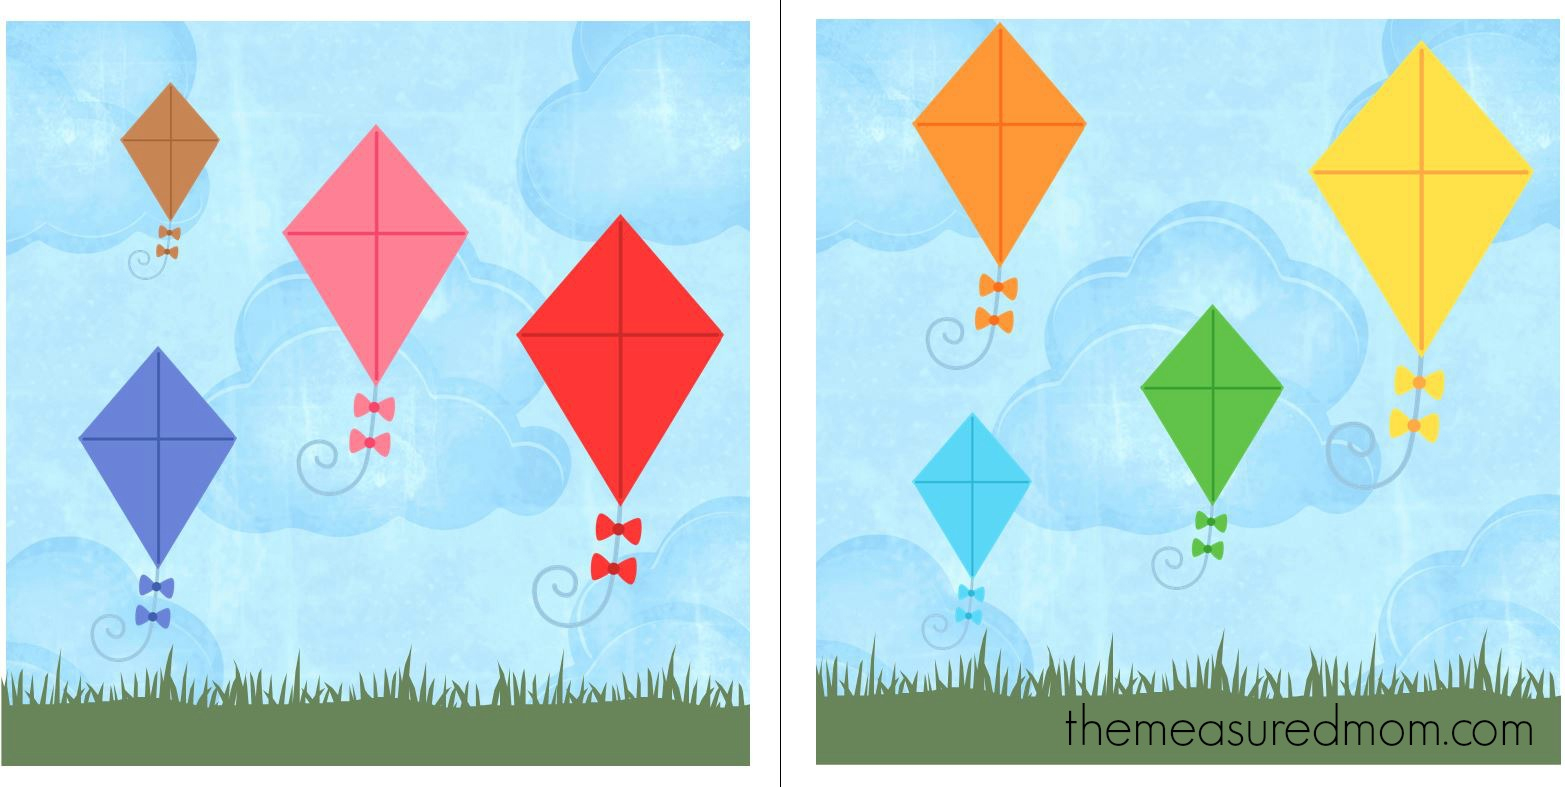 Free File Folder Game For Preschoolers: Kites! - The Measured Mom - Free Printable Math File Folder Games For Preschoolers